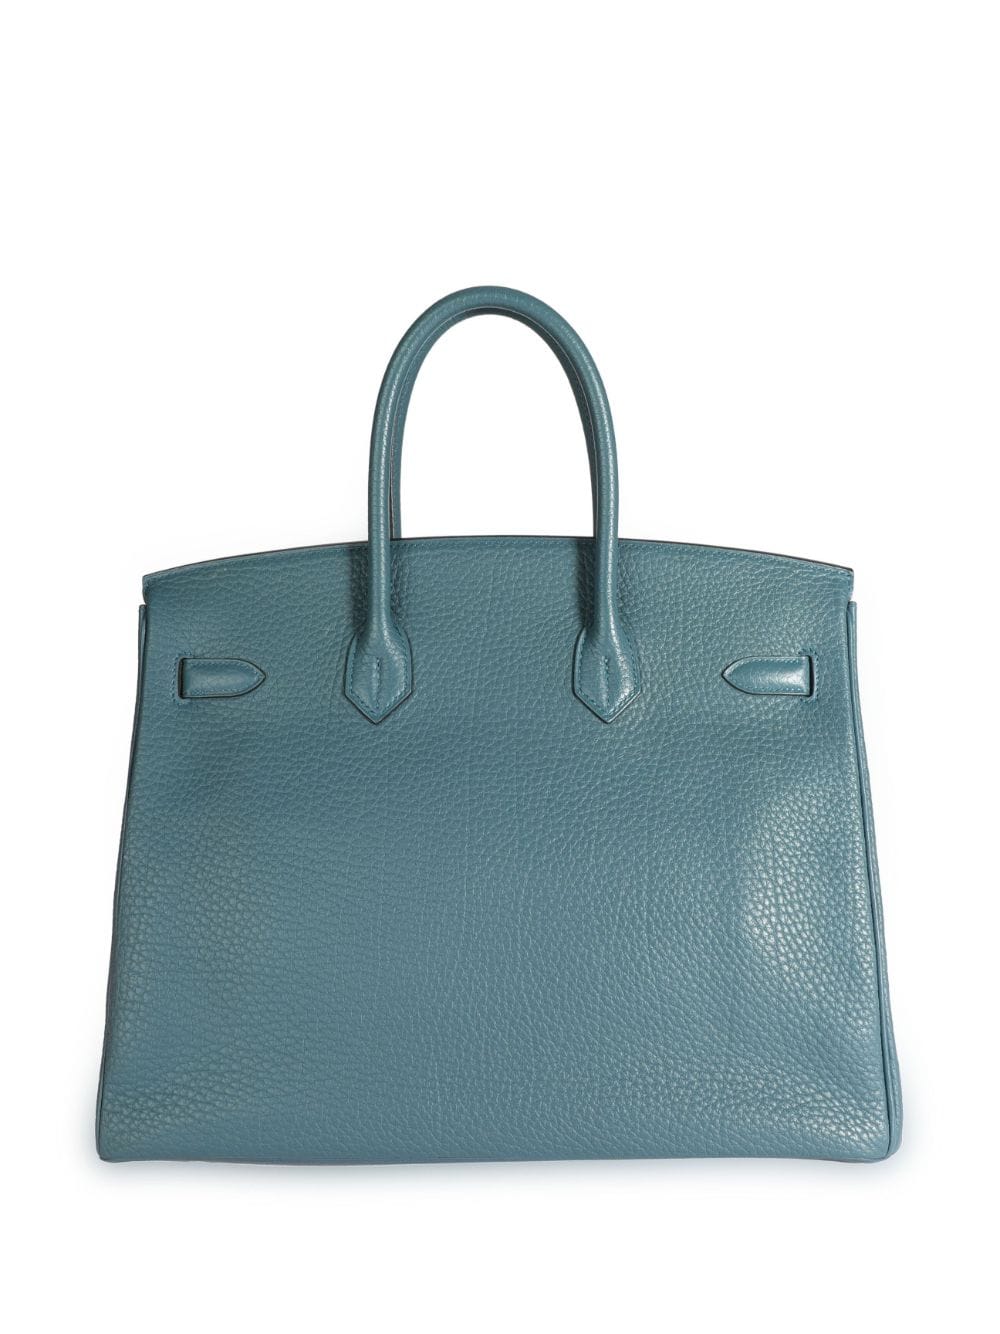 Hermès 2013 Birkin 35 Handbag